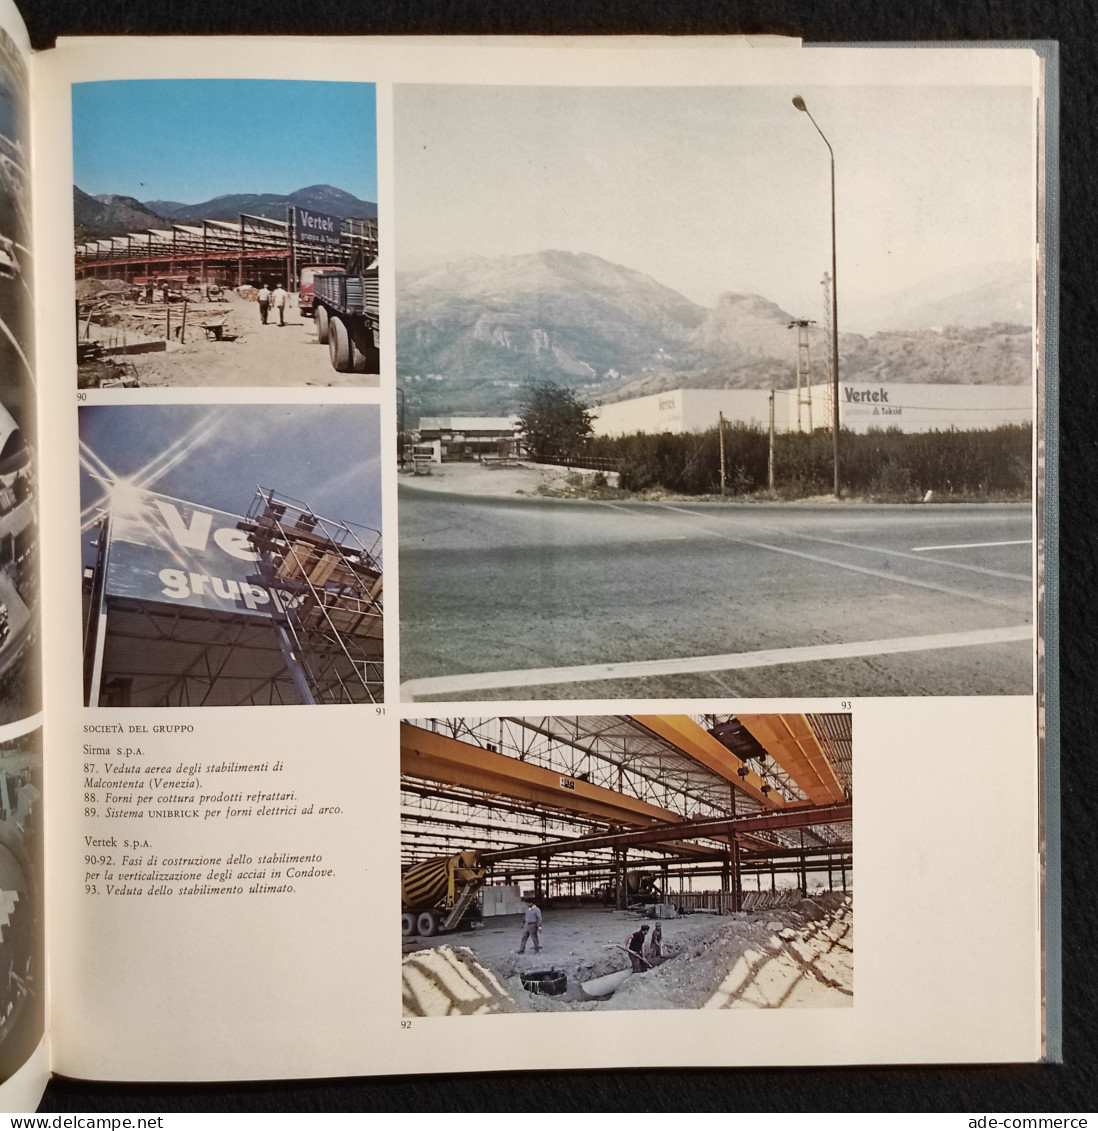 Pianeta Acciaio - Teksid - 1978 - Pictures